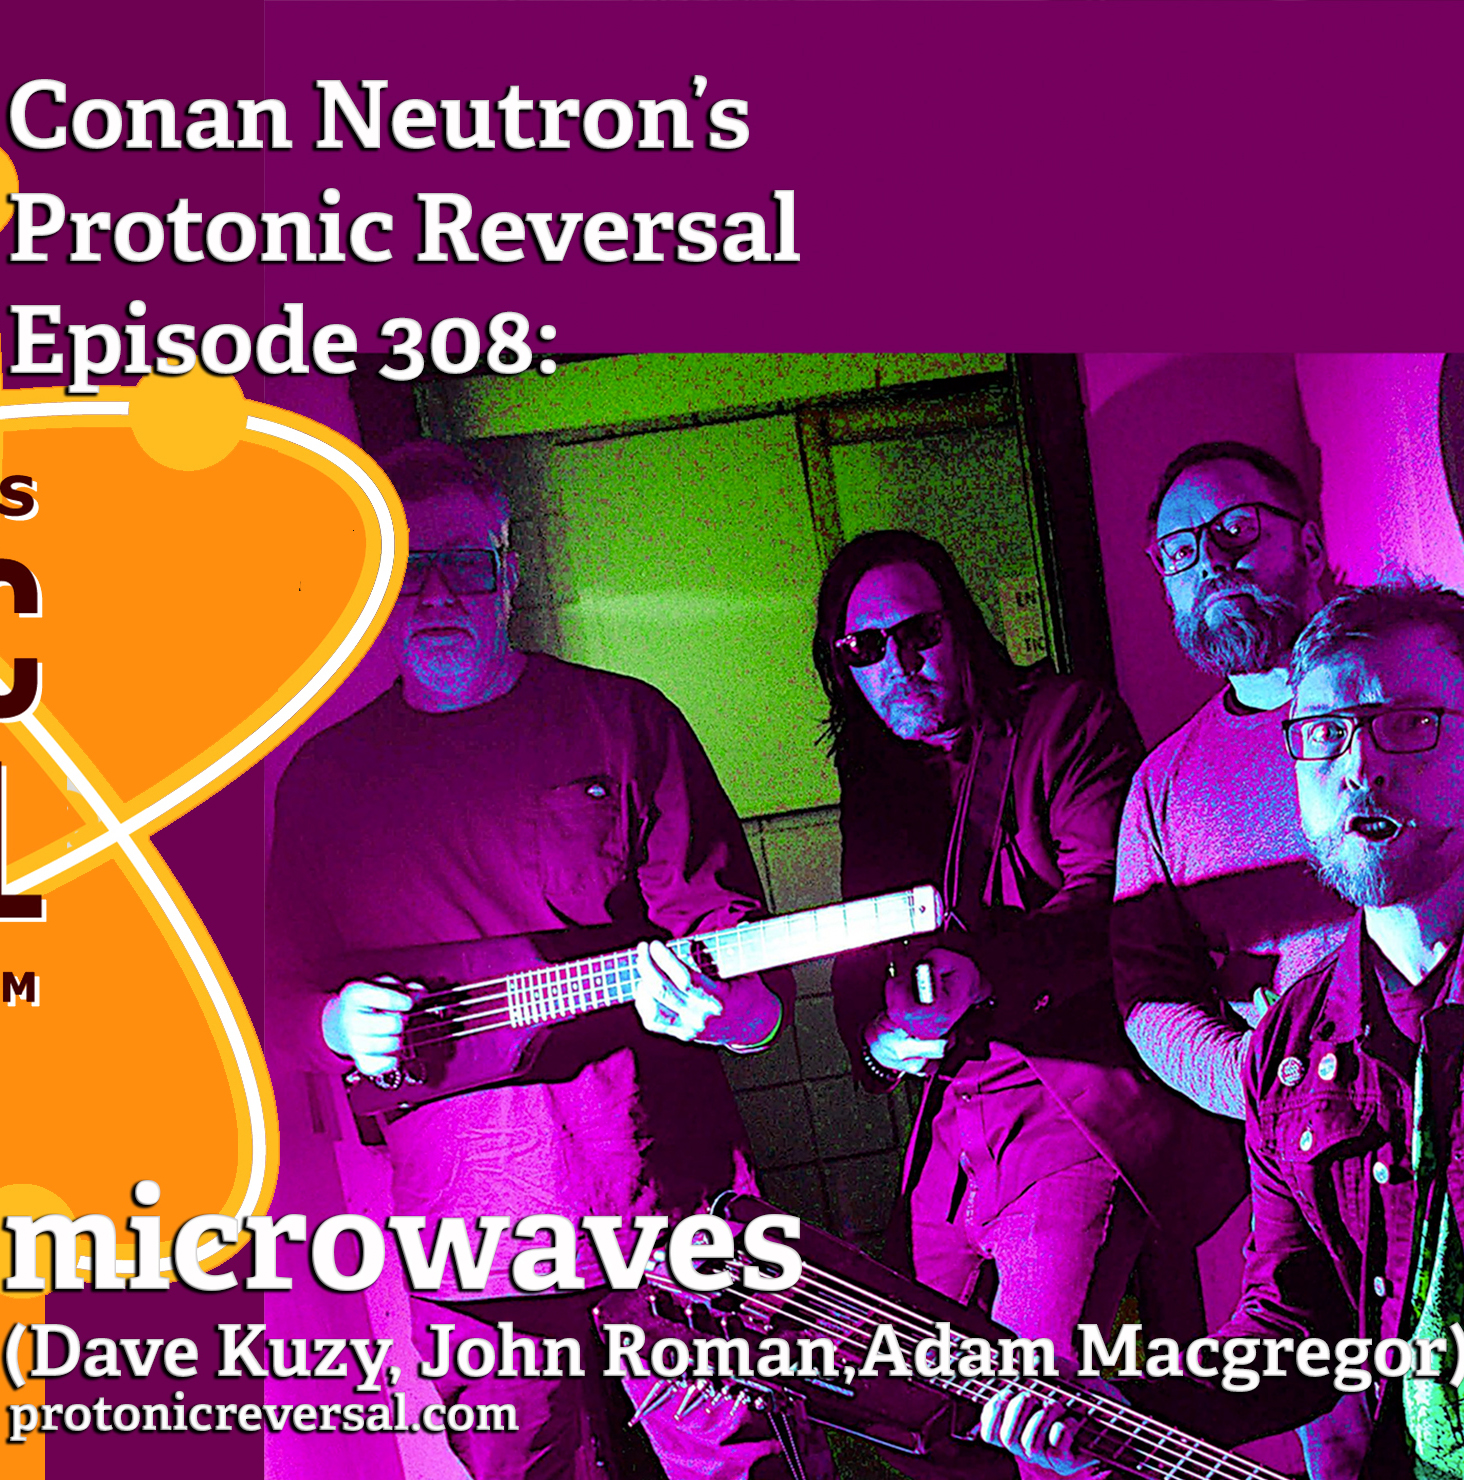 Ep308: microwaves (Dave Kuzy, John Roman, Adam Macgregor) post thumbnail image